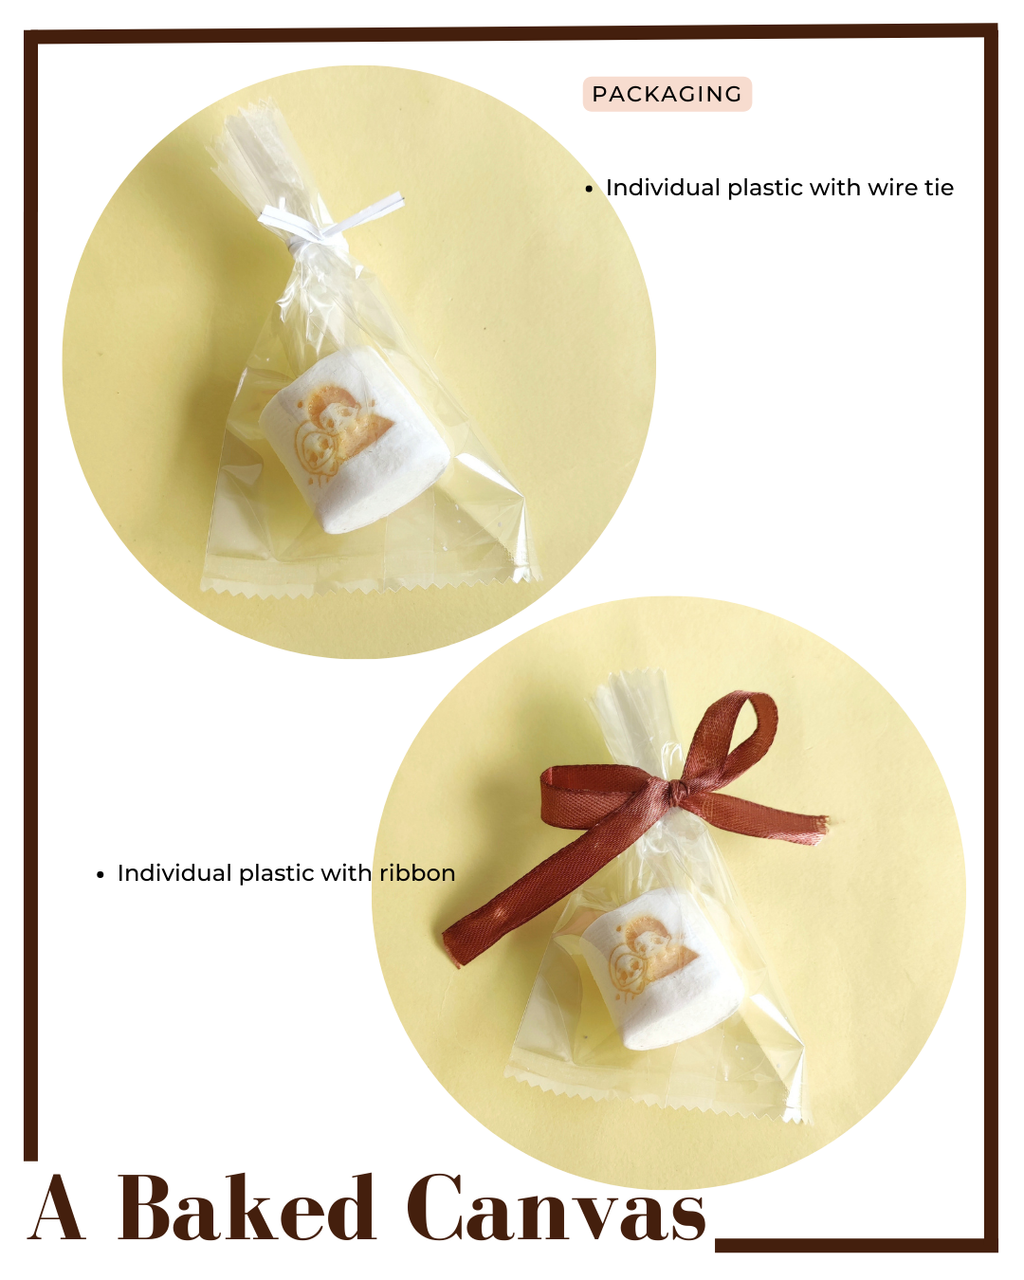 Marshmallow packaging